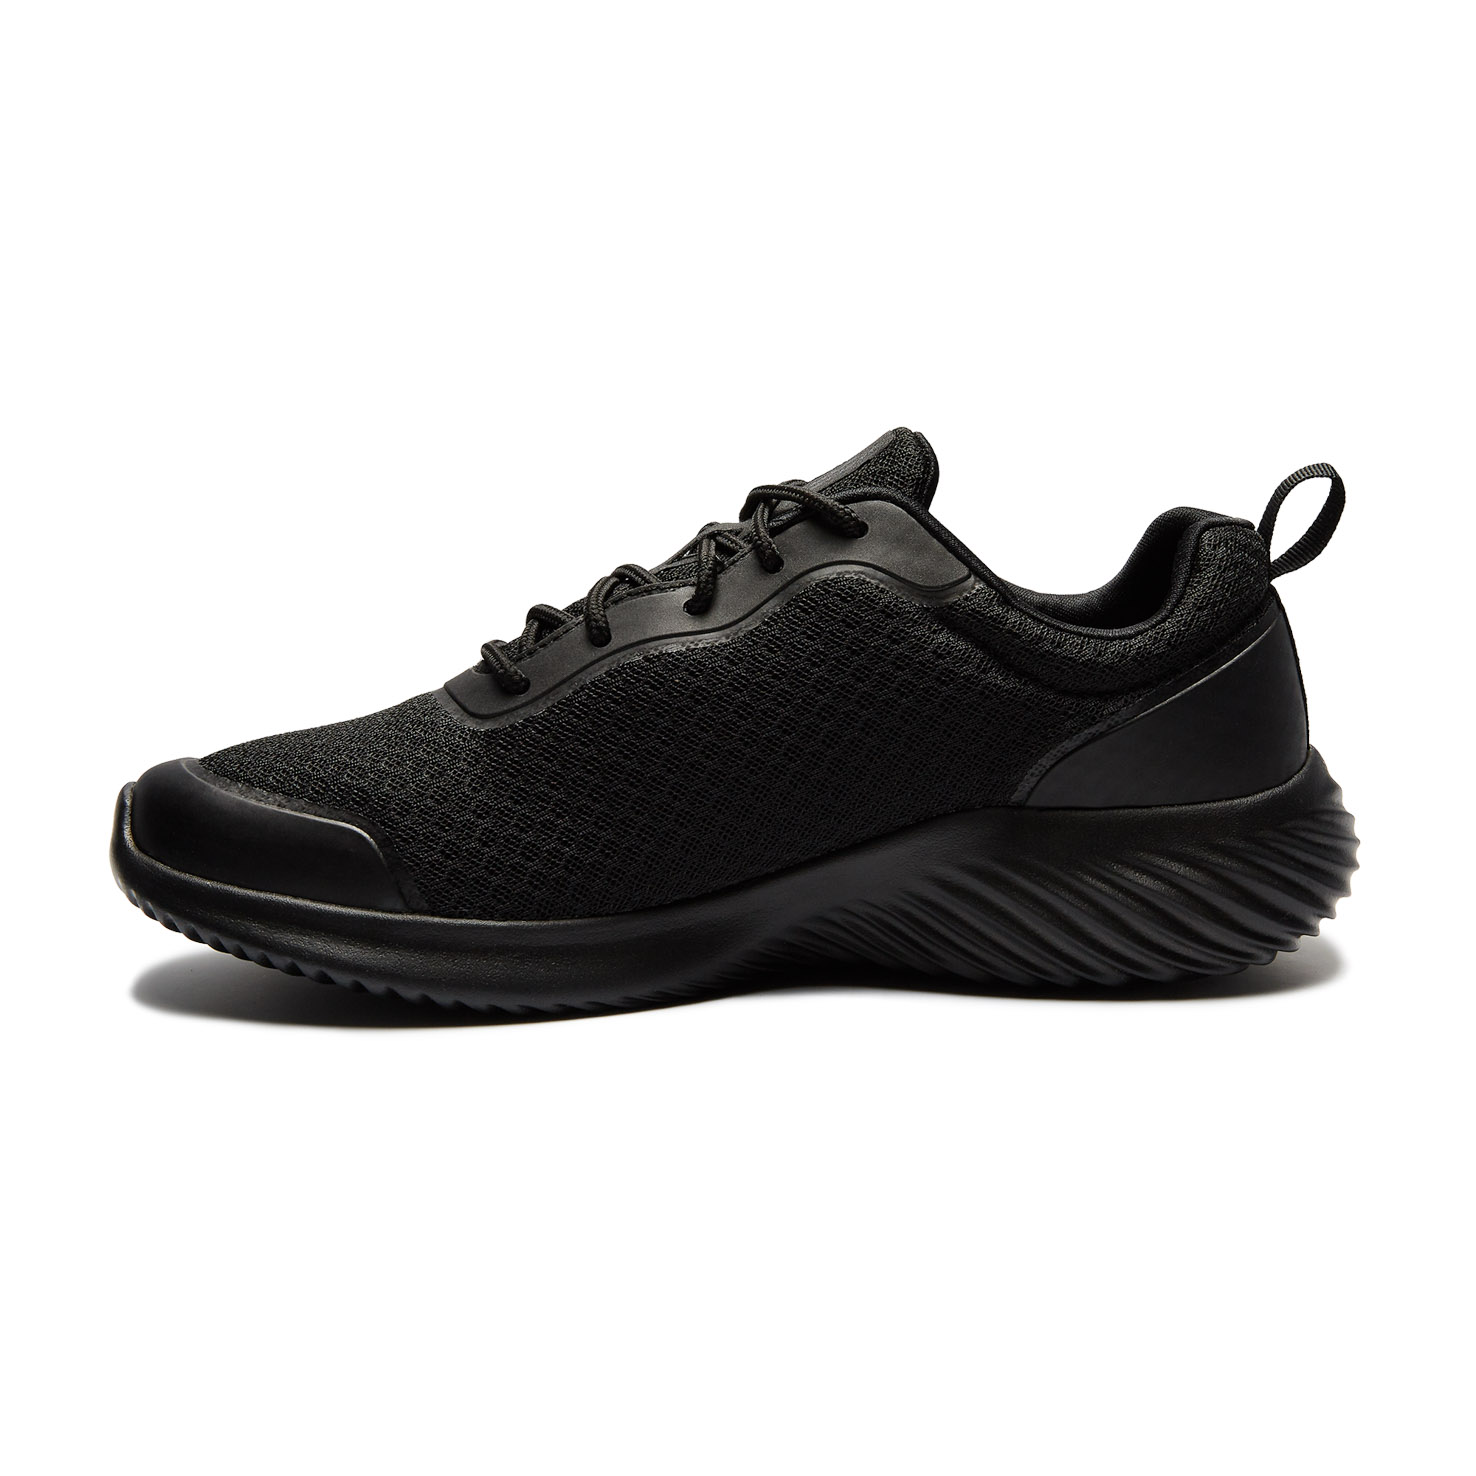 Men's low shoes SKECHERS, размер 40, цвет черный SK232005 - фото 5